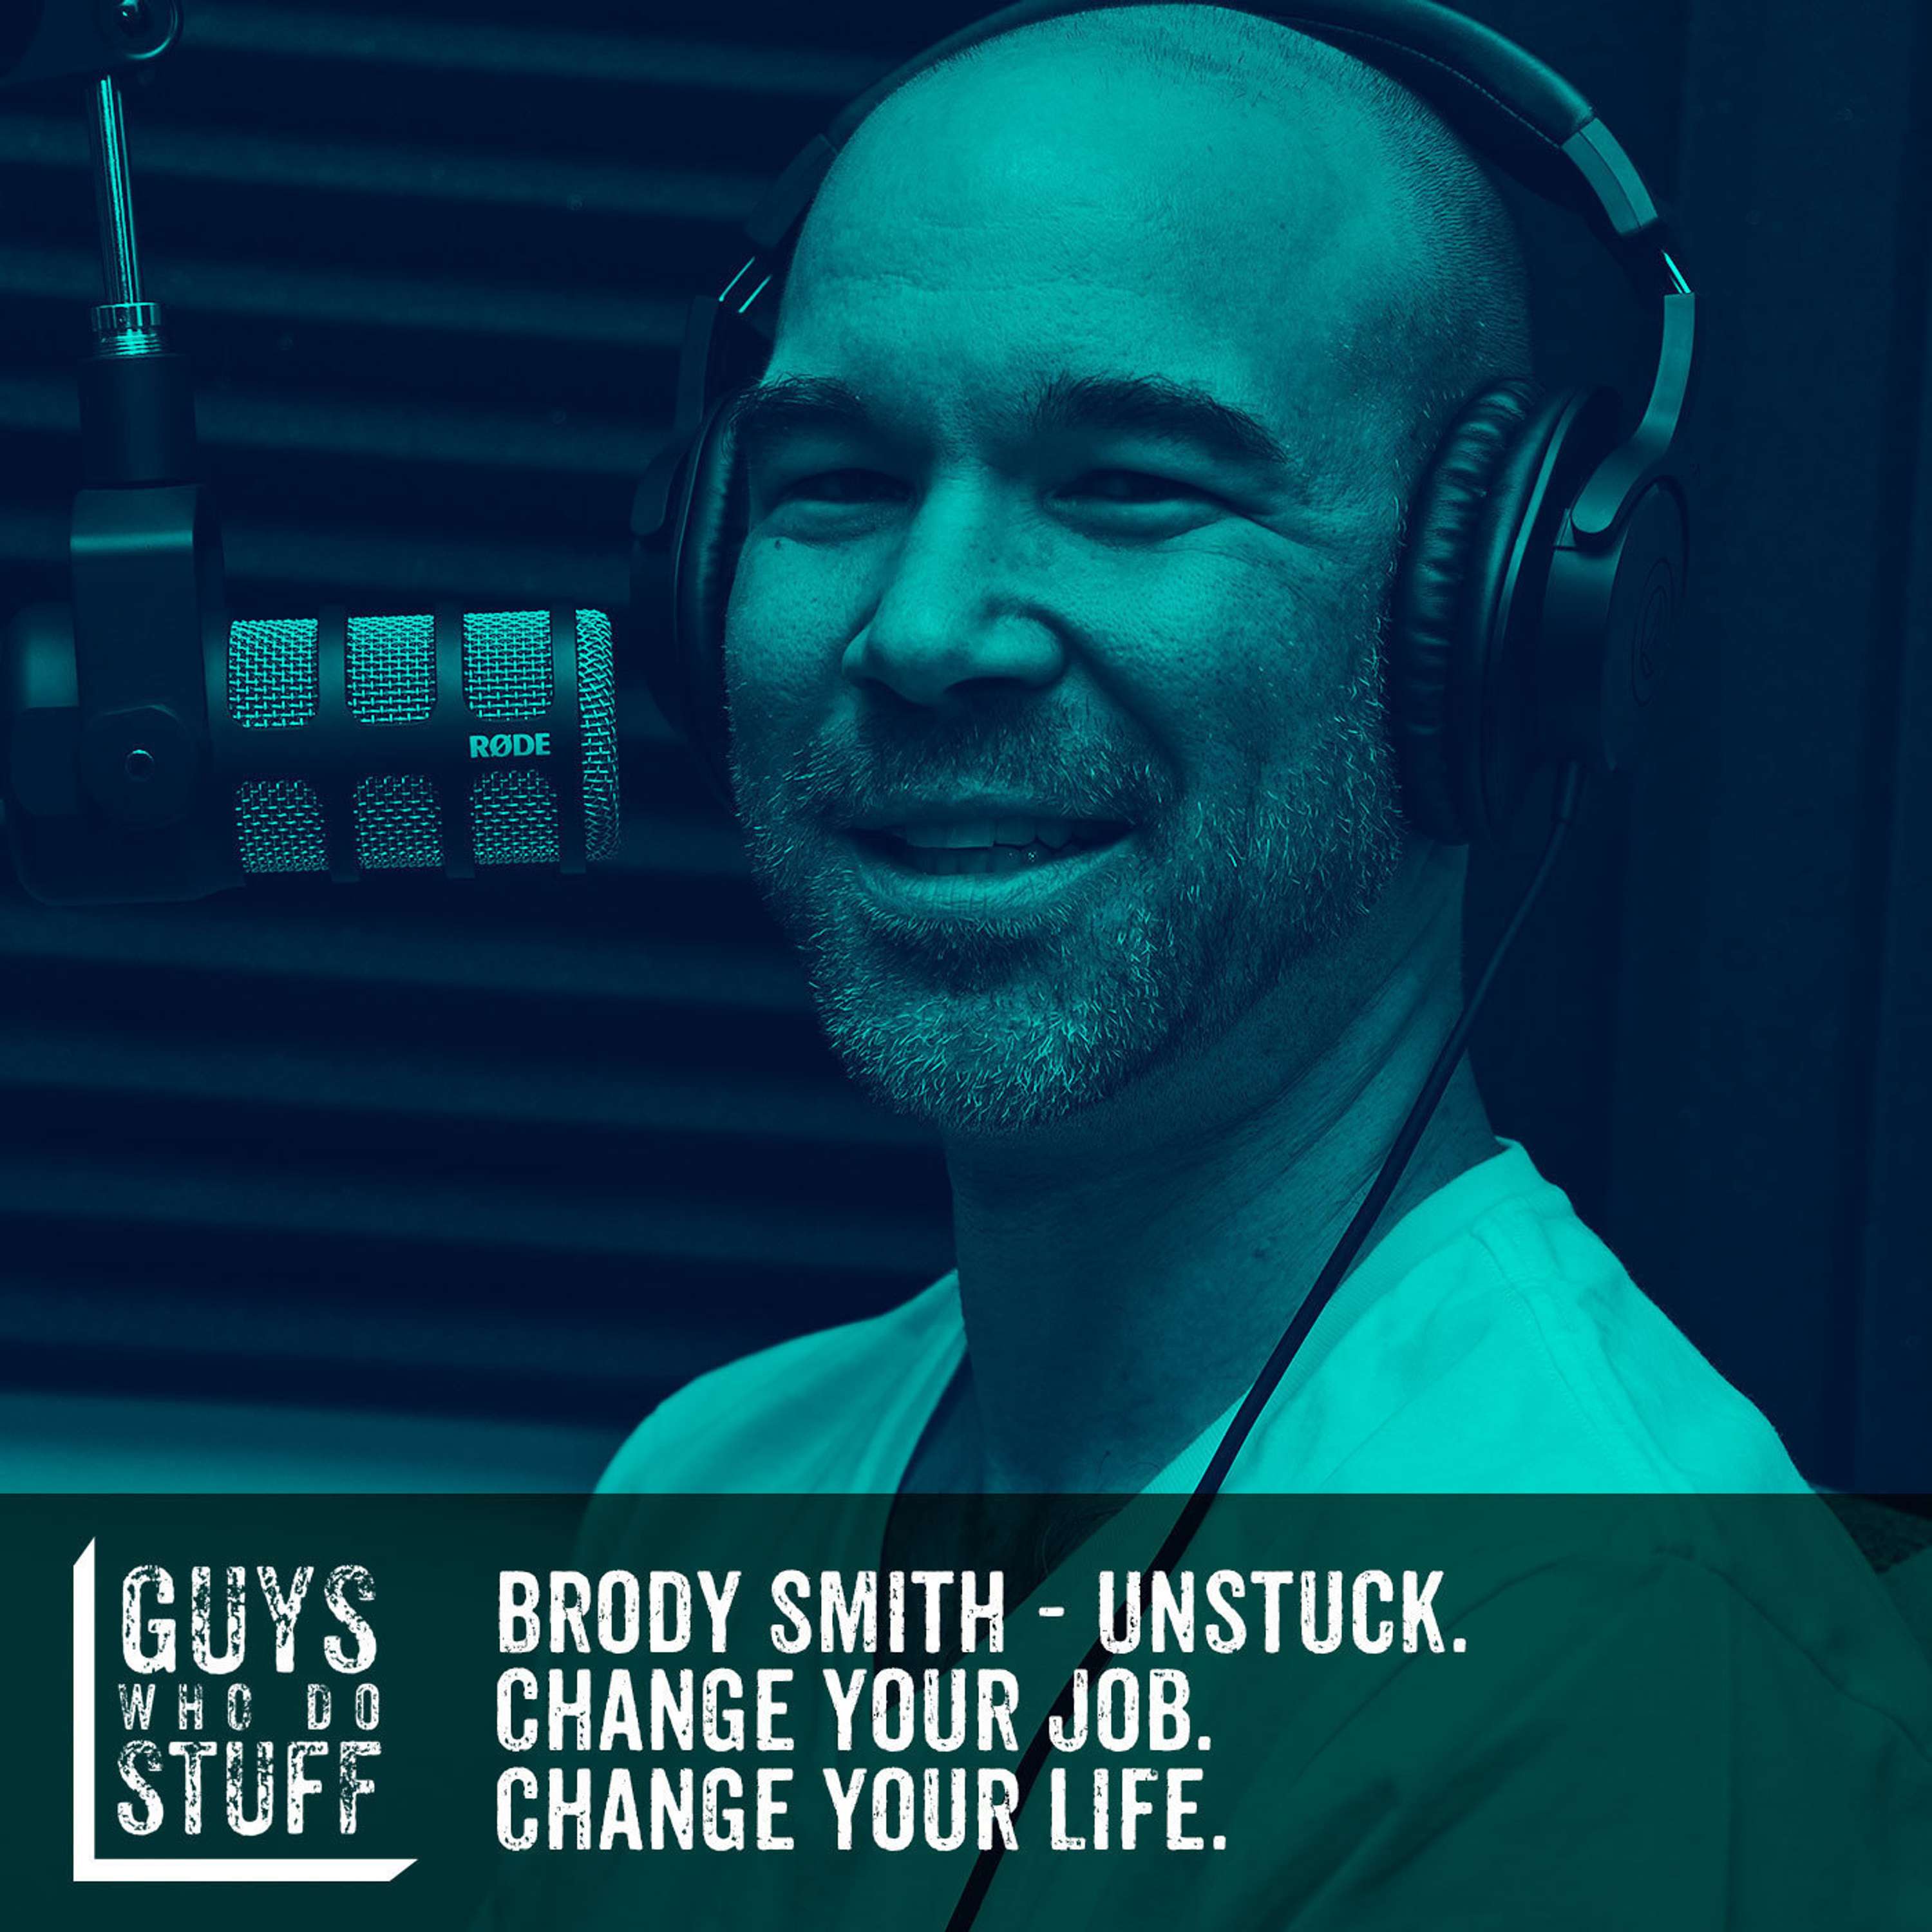 Brody Smith - Unstuck. Change your job. Change your life.